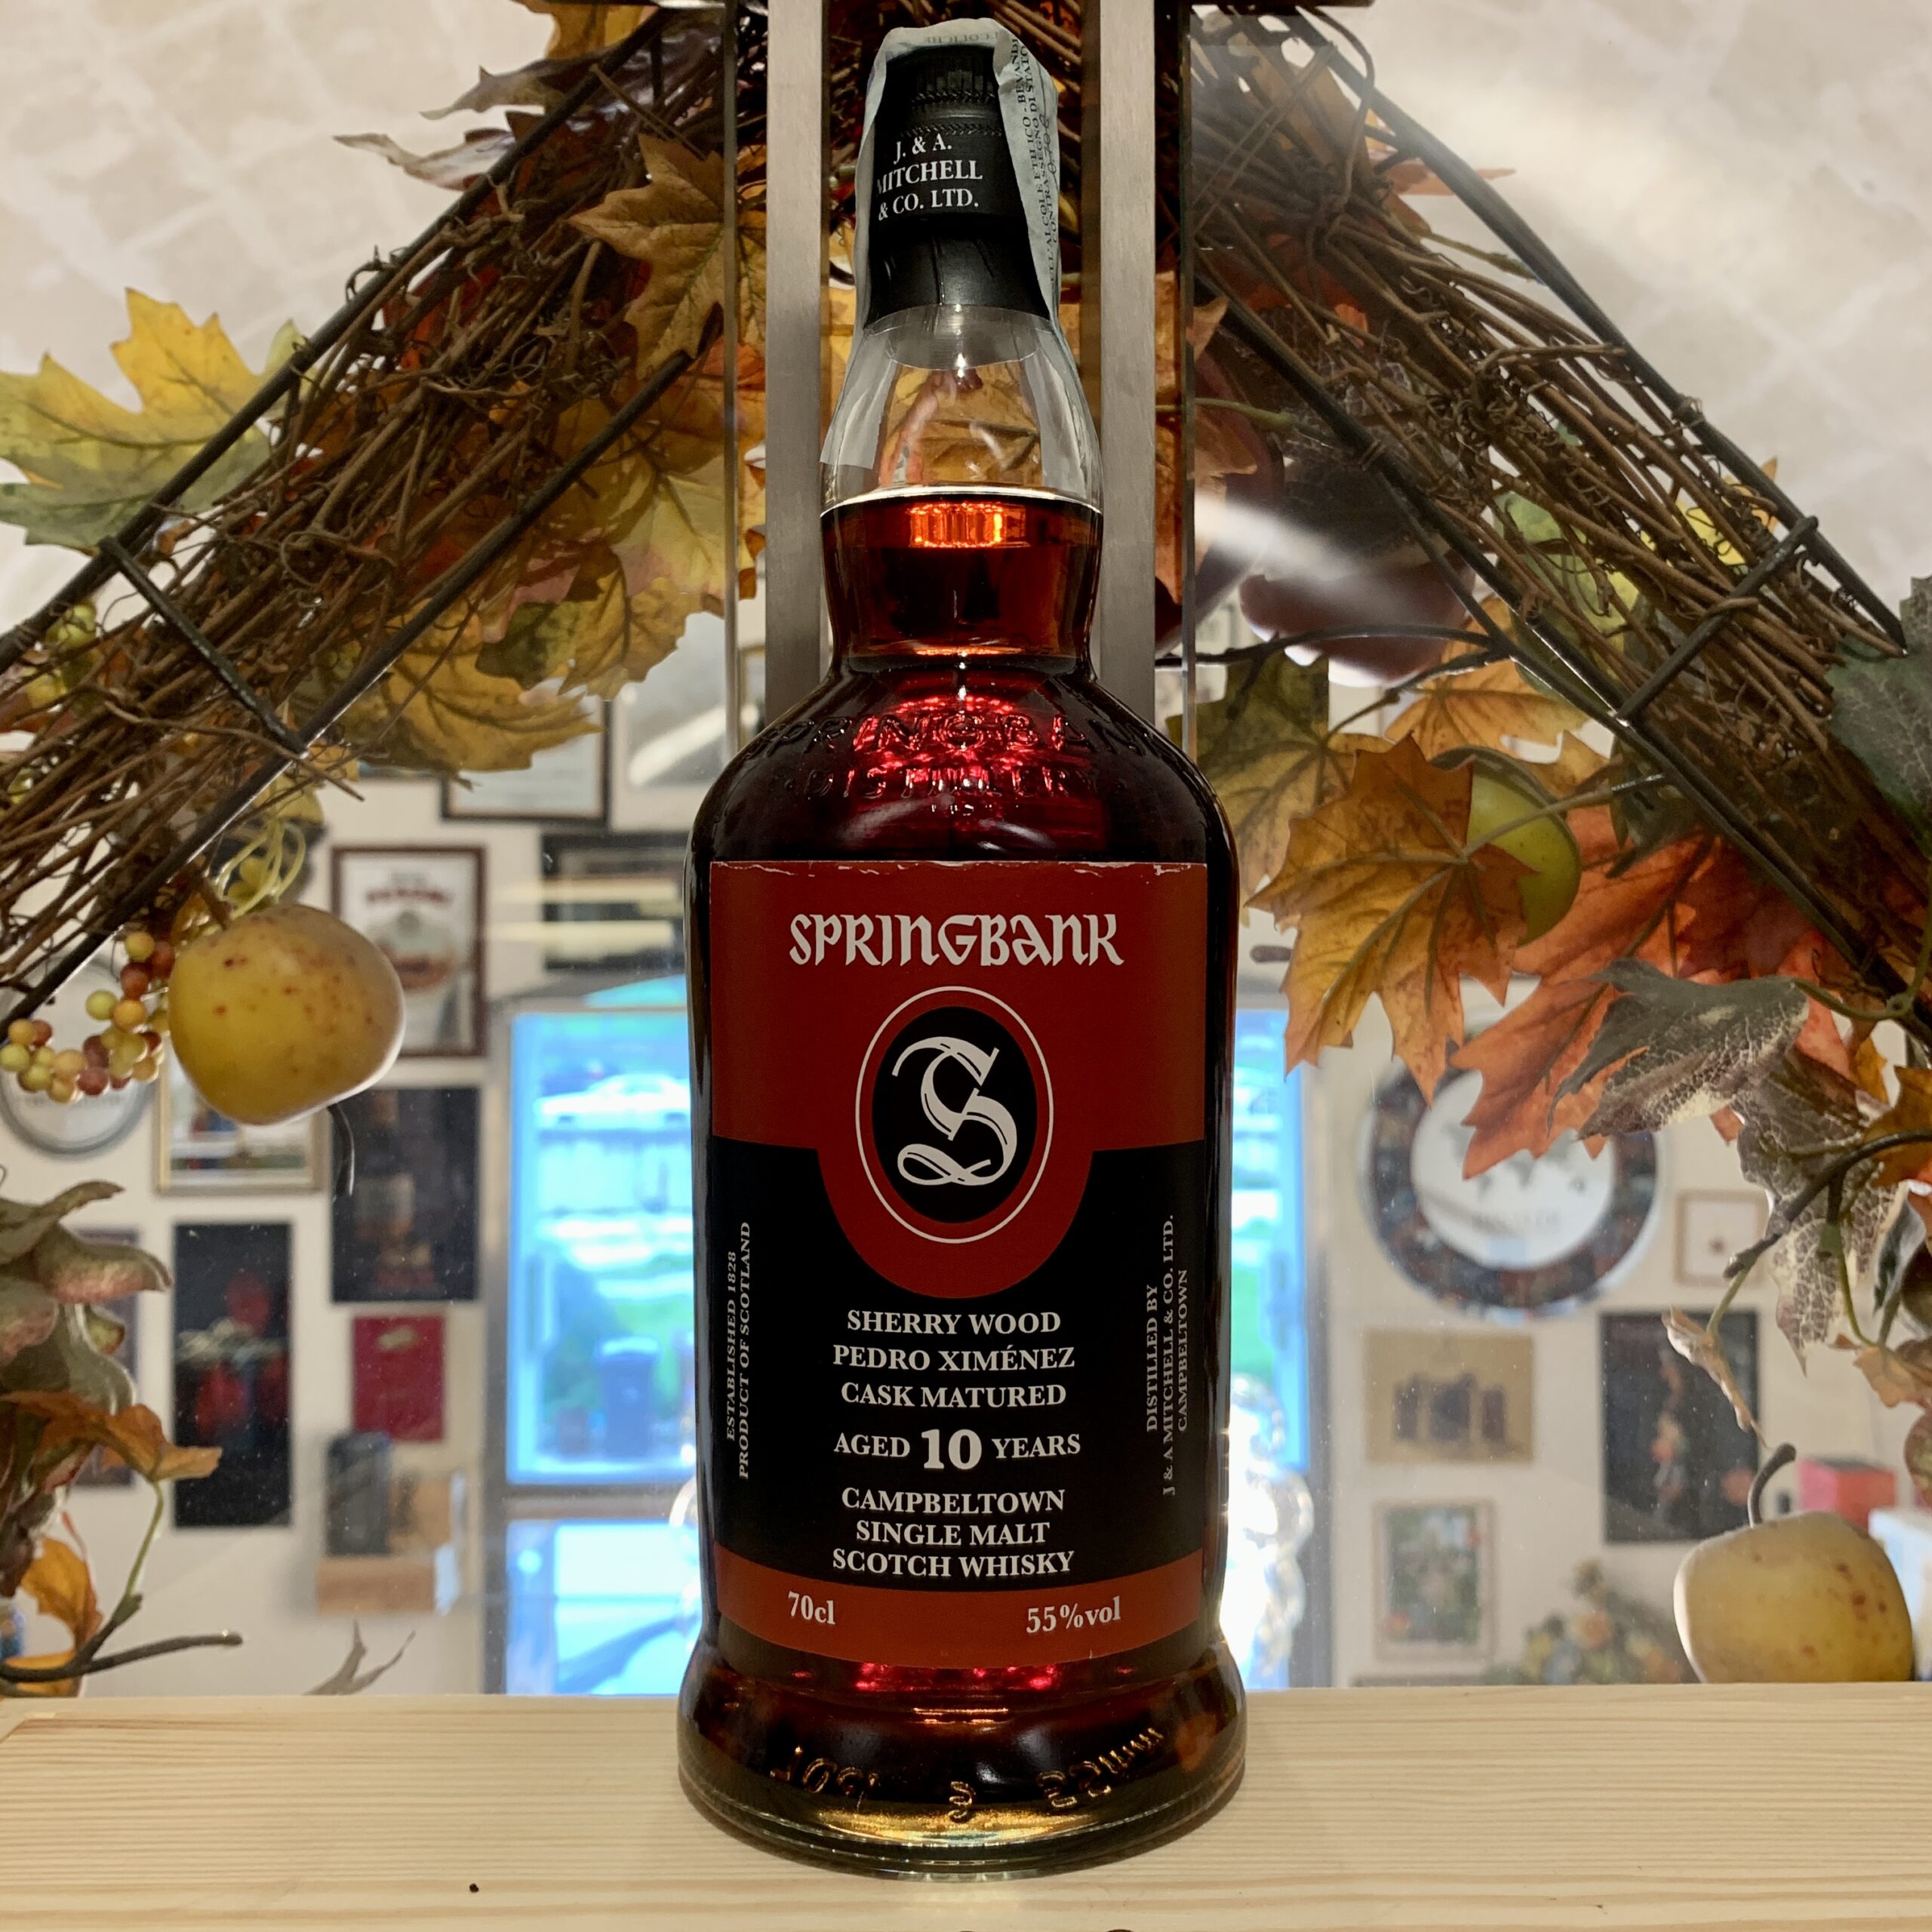 Springbank Campbeltown Single Malt Scotch Whisky 10 YO Sherry Wood PX